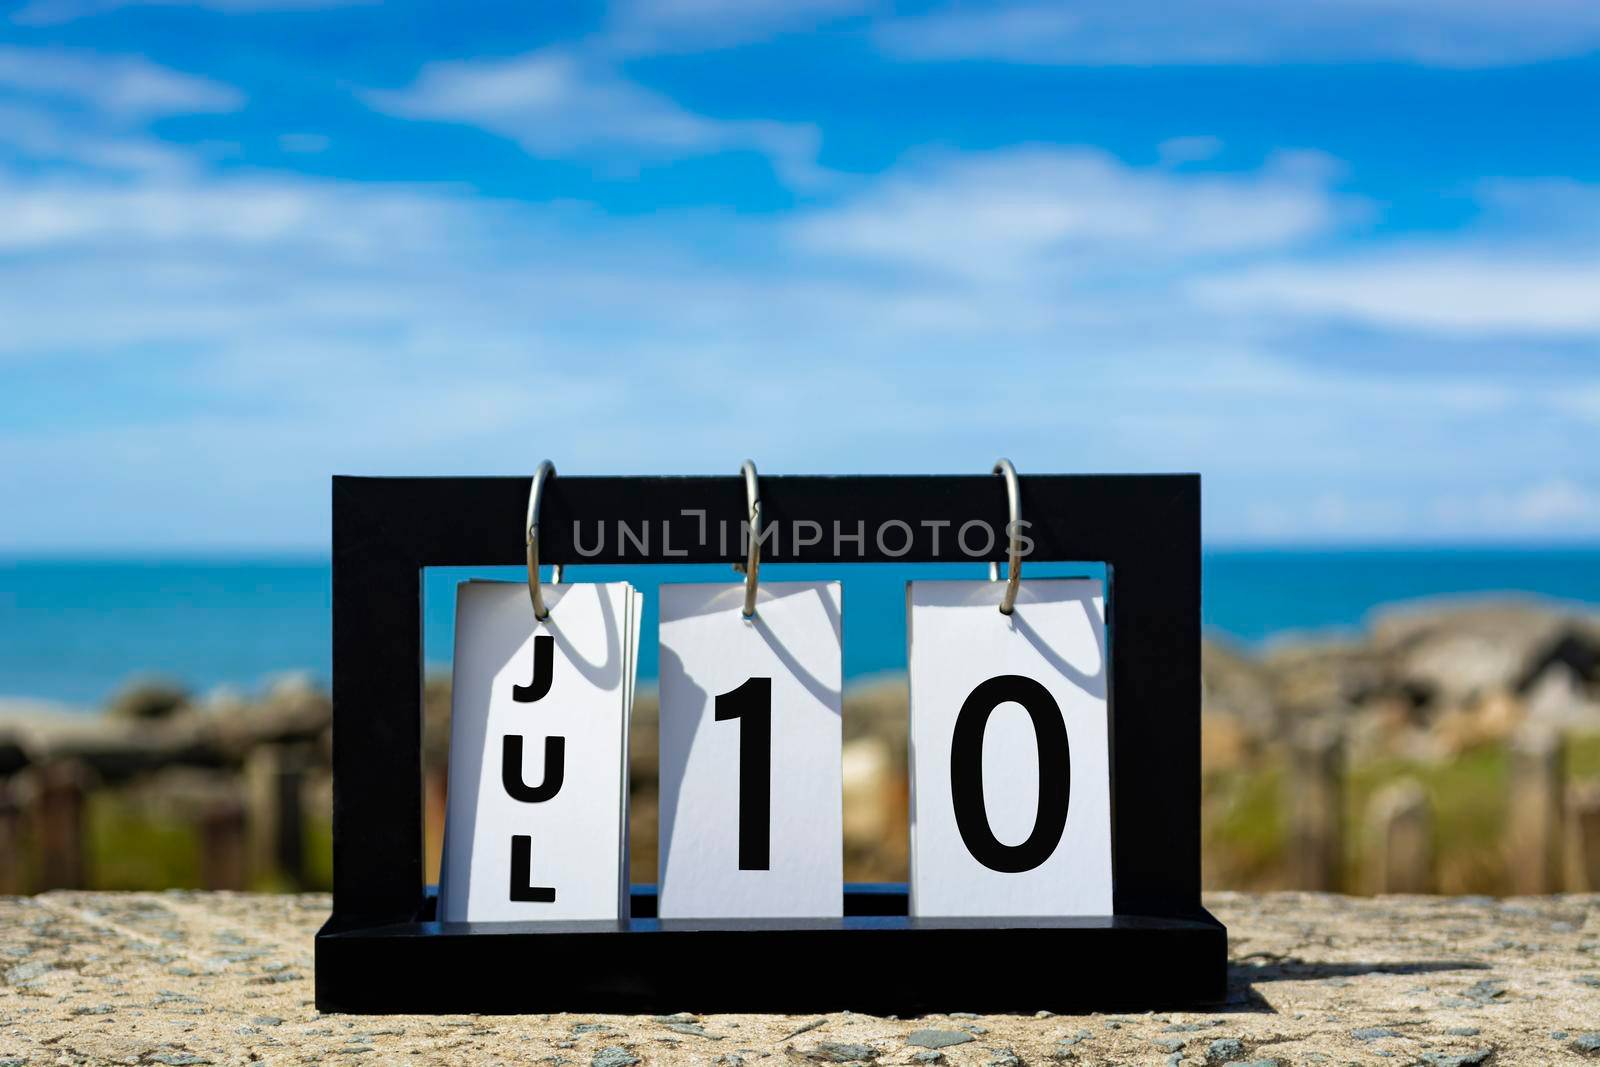 Jul 10 calendar date text on wooden frame with blurred background of ocean. Calendar date concept.